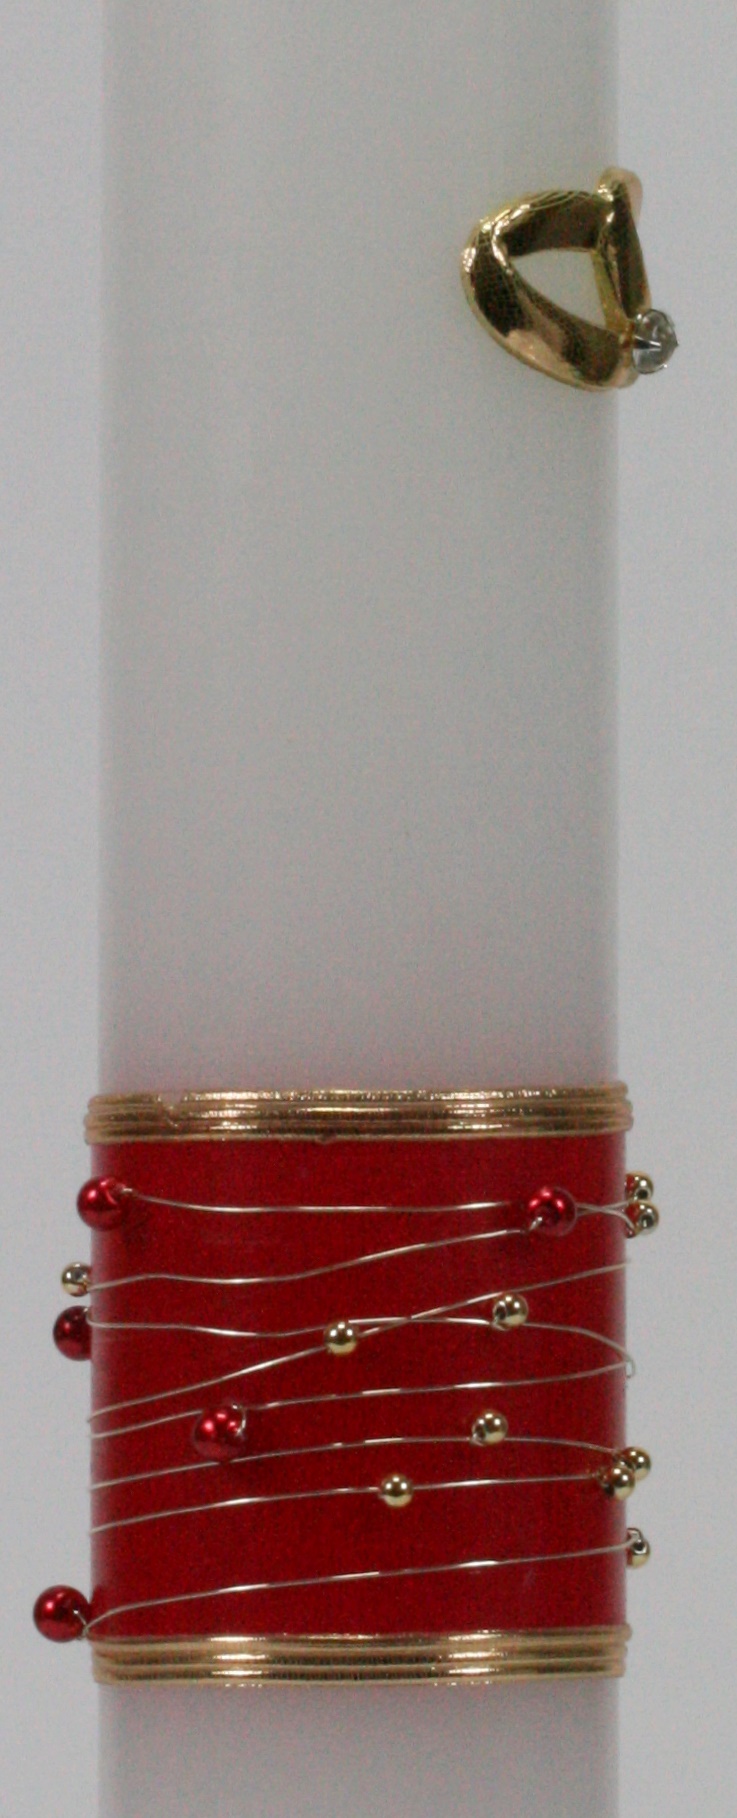 Hochzeitskerze - Goldene Ringe & Rotes Perlenband